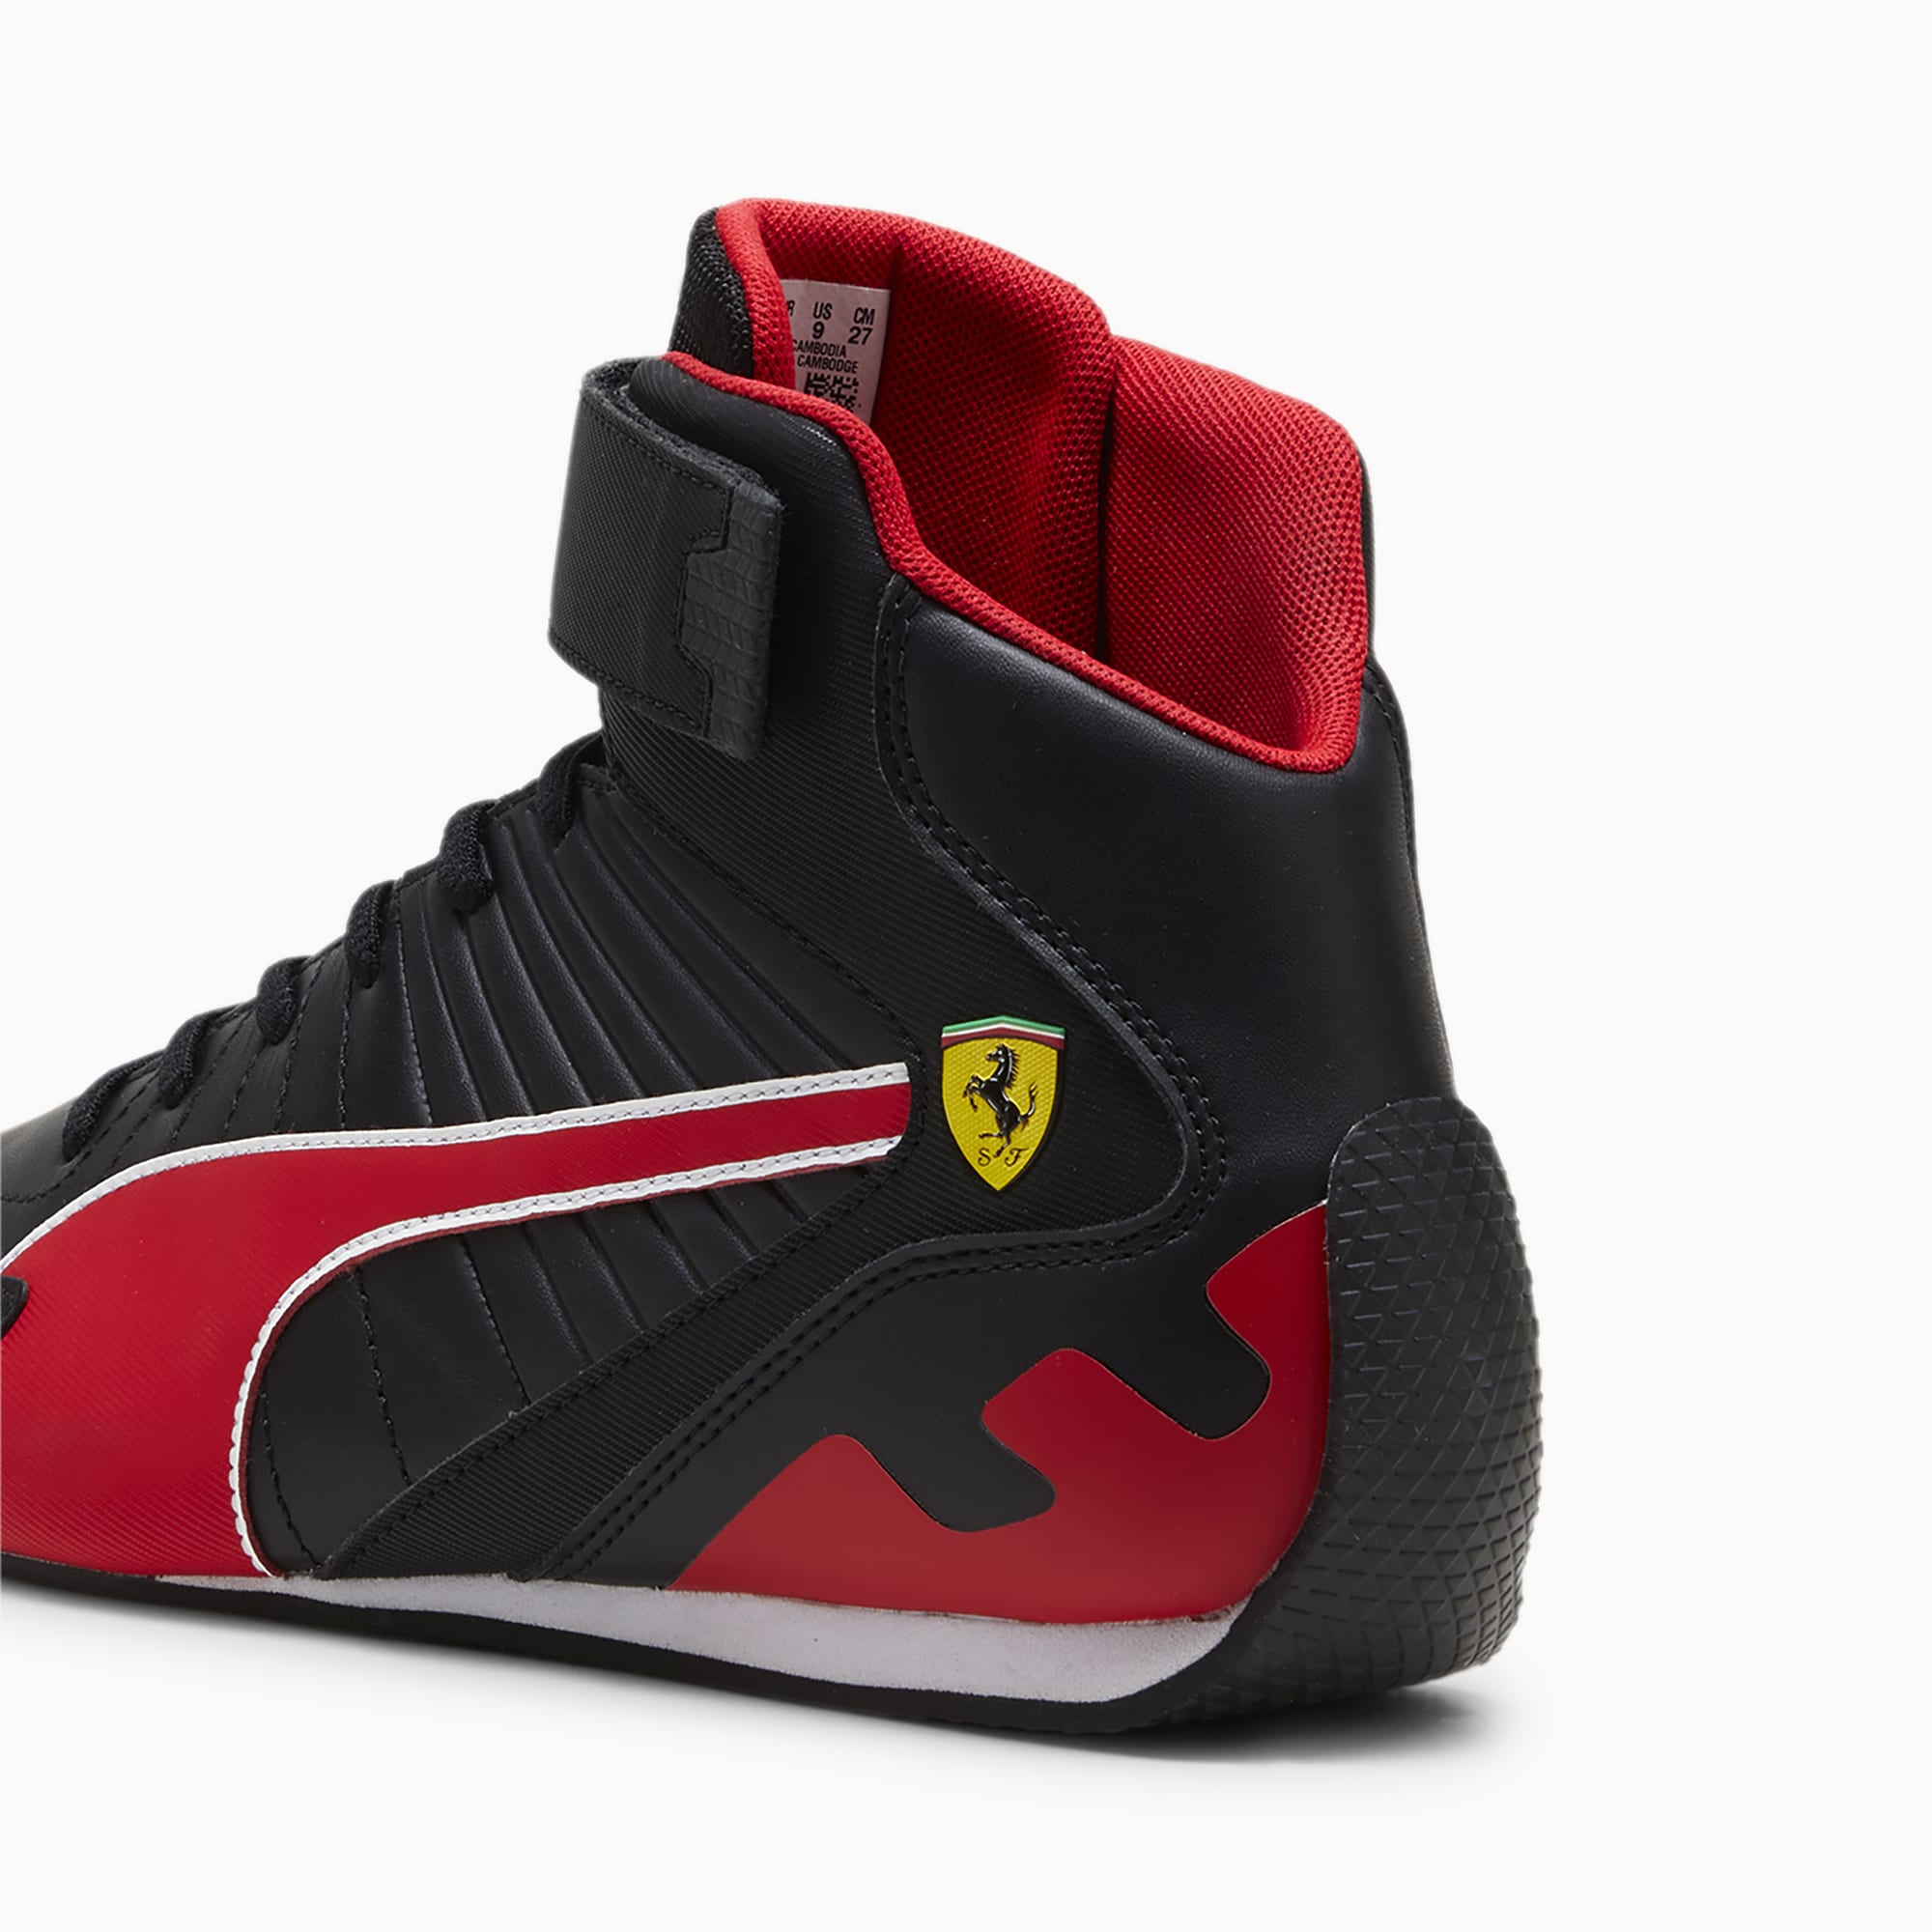 PUMA Scuderia Ferrari Kart Cat RL Mid Motorsport Sneakers Schuhe, Schwarz/Rot, Größe: 39, Schuhe